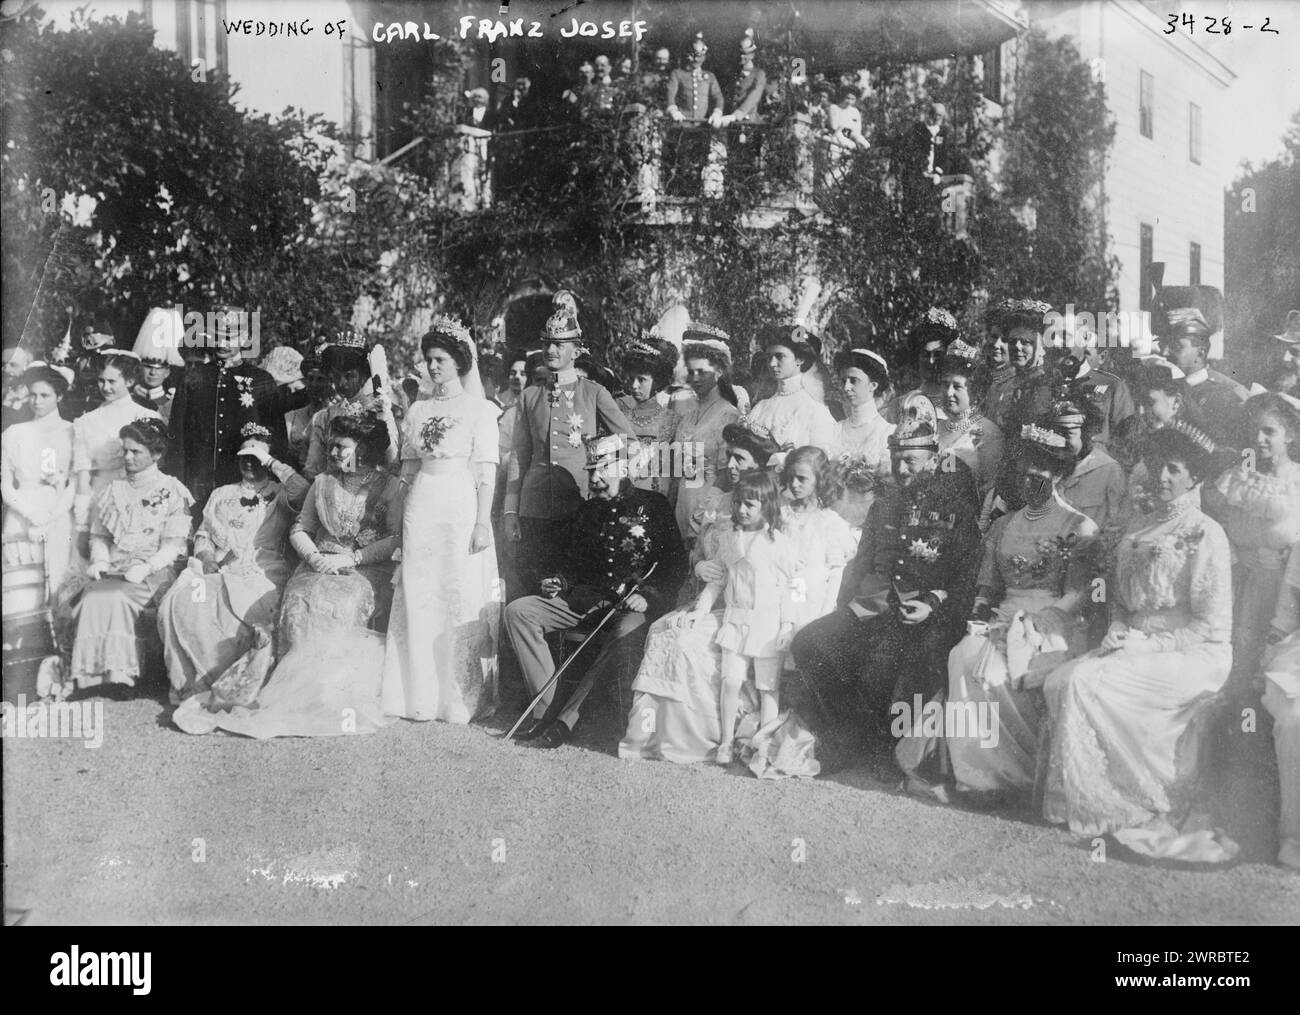 Wedding of Carl Franz Josef, between ca. 1910 and ca. 1915, Glass negatives, 1 negative: glass Stock Photo